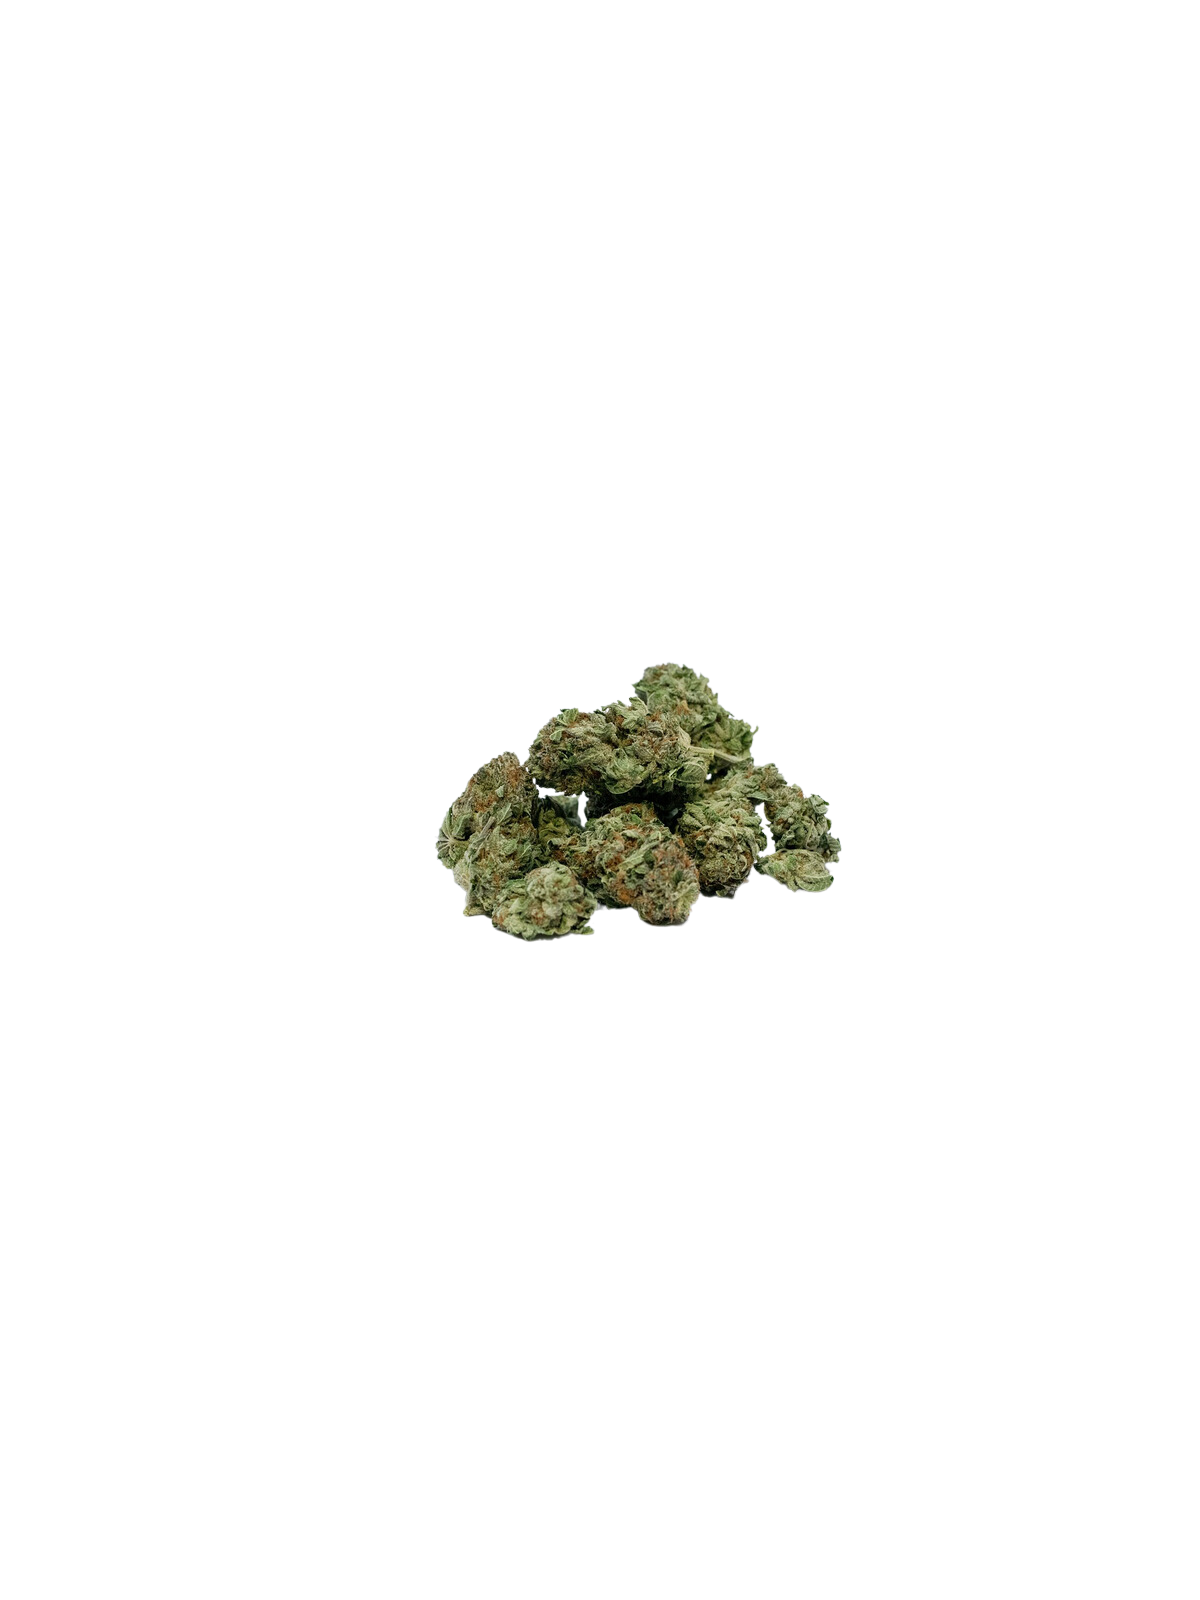 Cannabis Light - SOUL MARLEY - 2 gr - 1